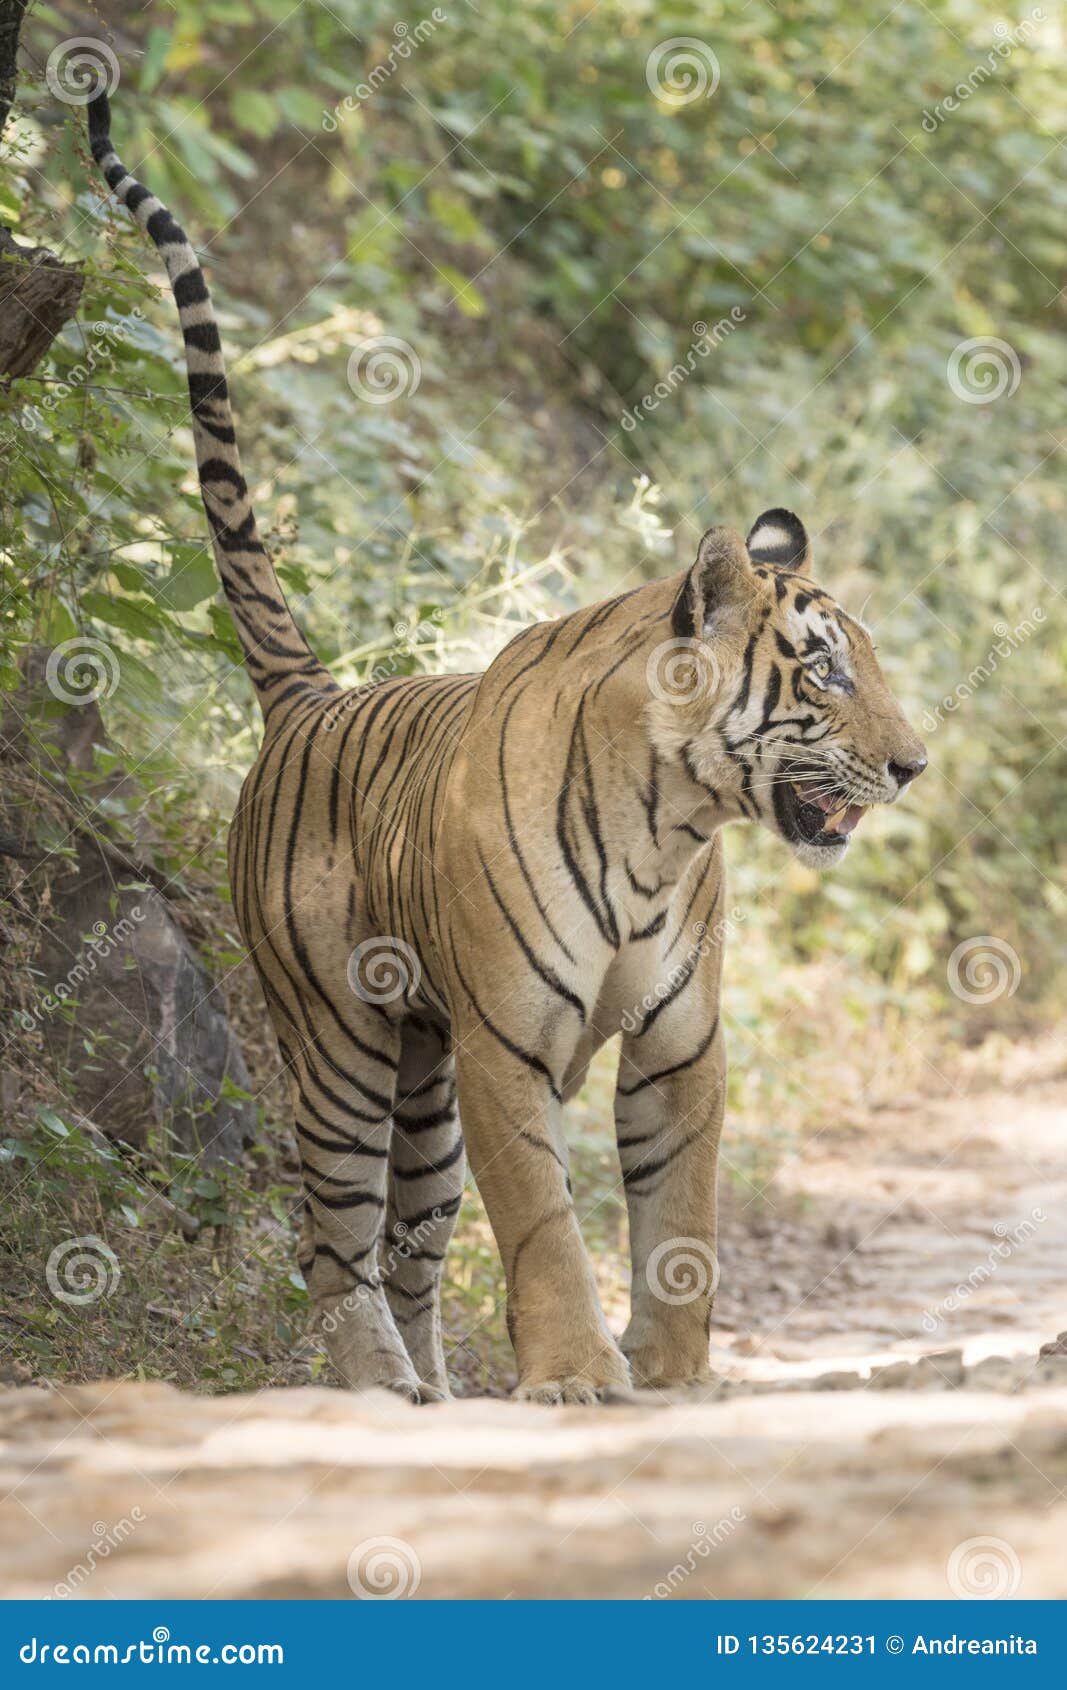 Bengal Tiger Hunting, Bandhavgarh National Park - India 